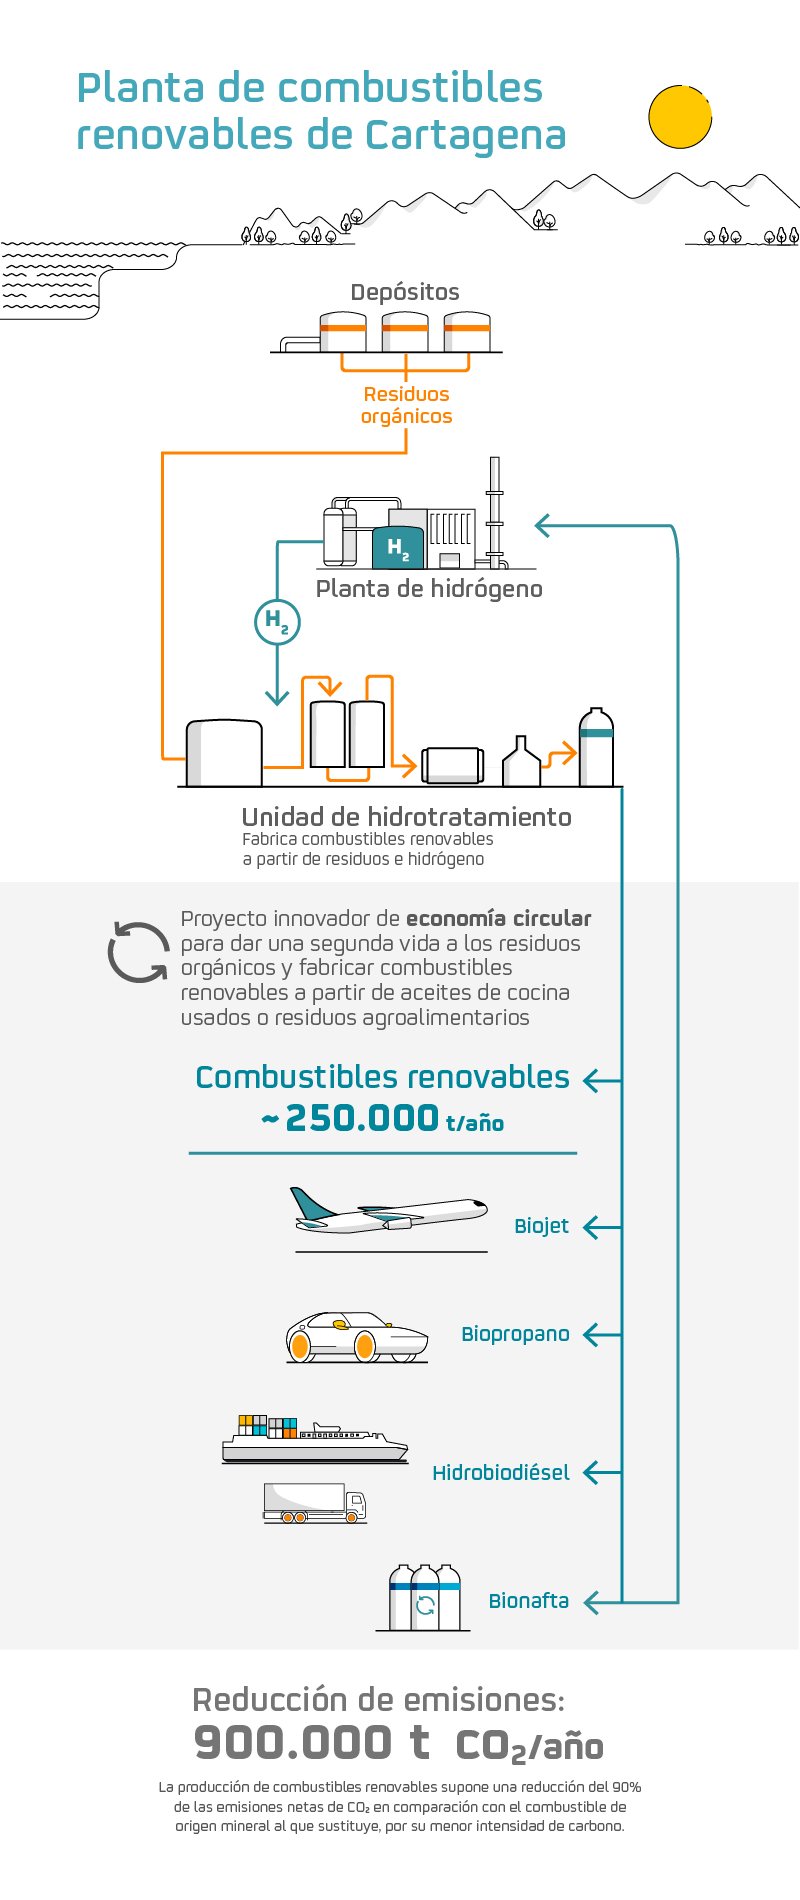 Infographic Cartagena renewable fuels plant